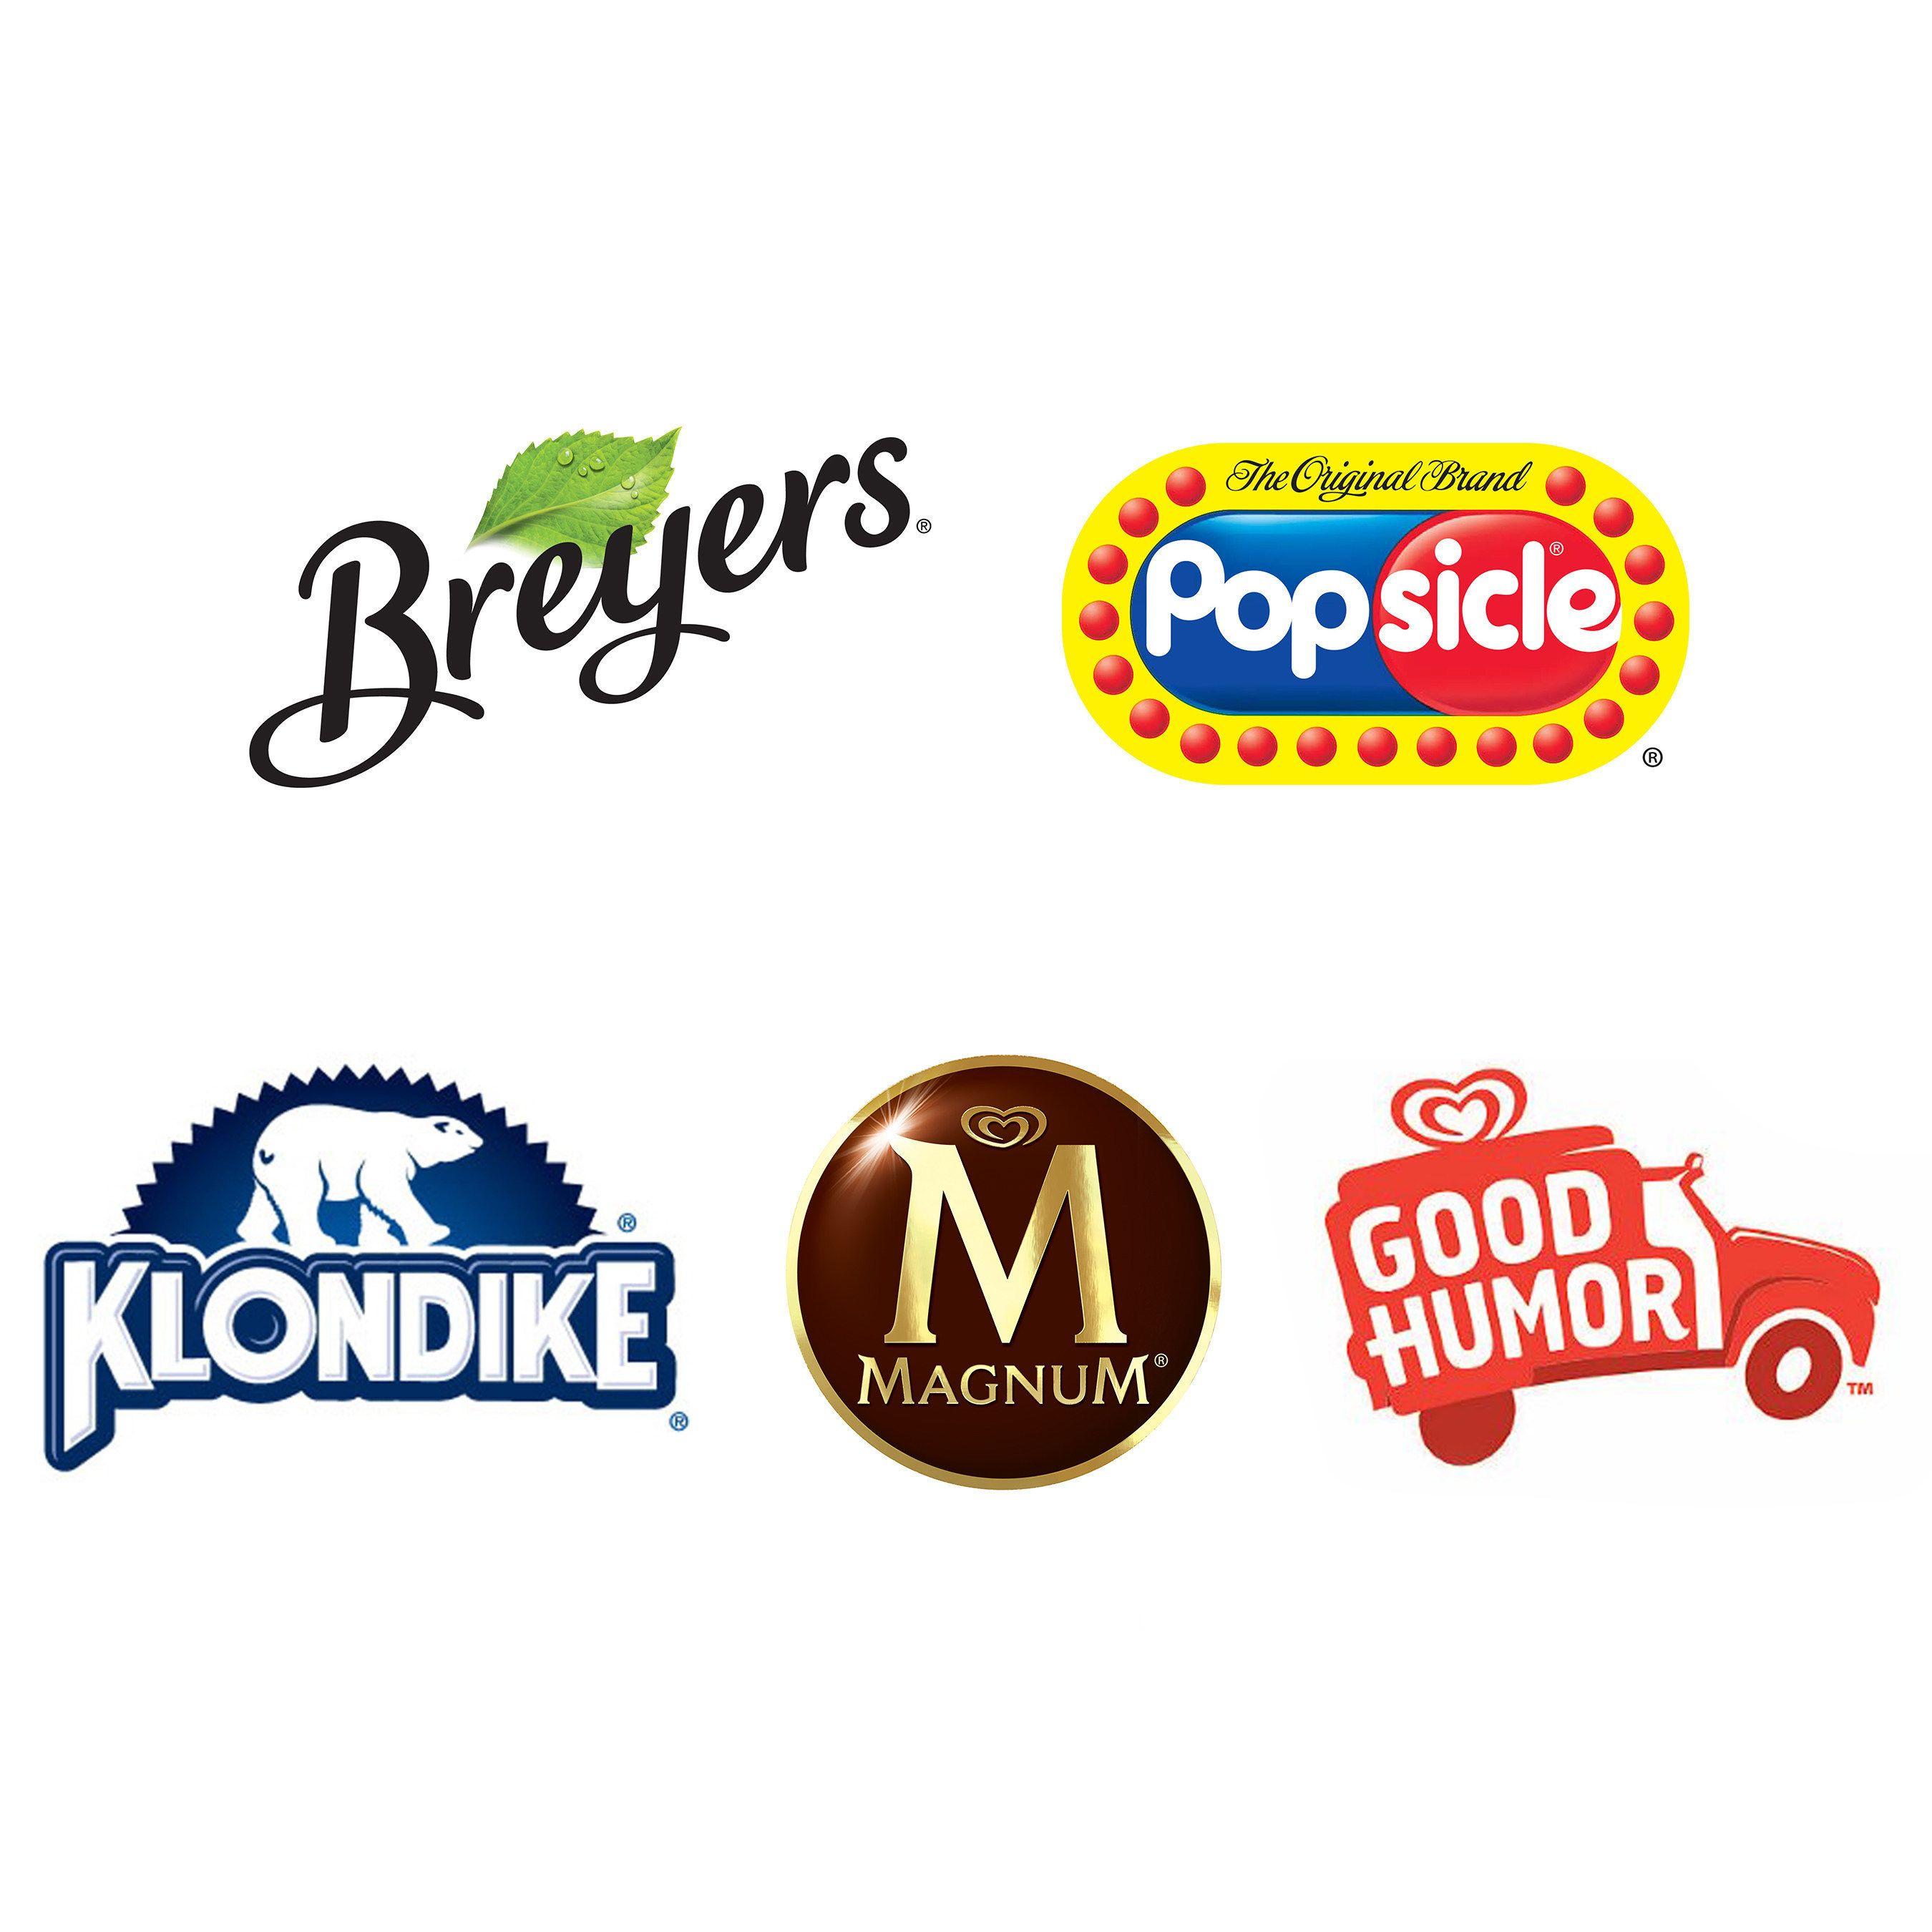 Ice Cream Brand Logo - Get the Scoop! Unilever Ice Cream Introduces New Frozen Treats ...